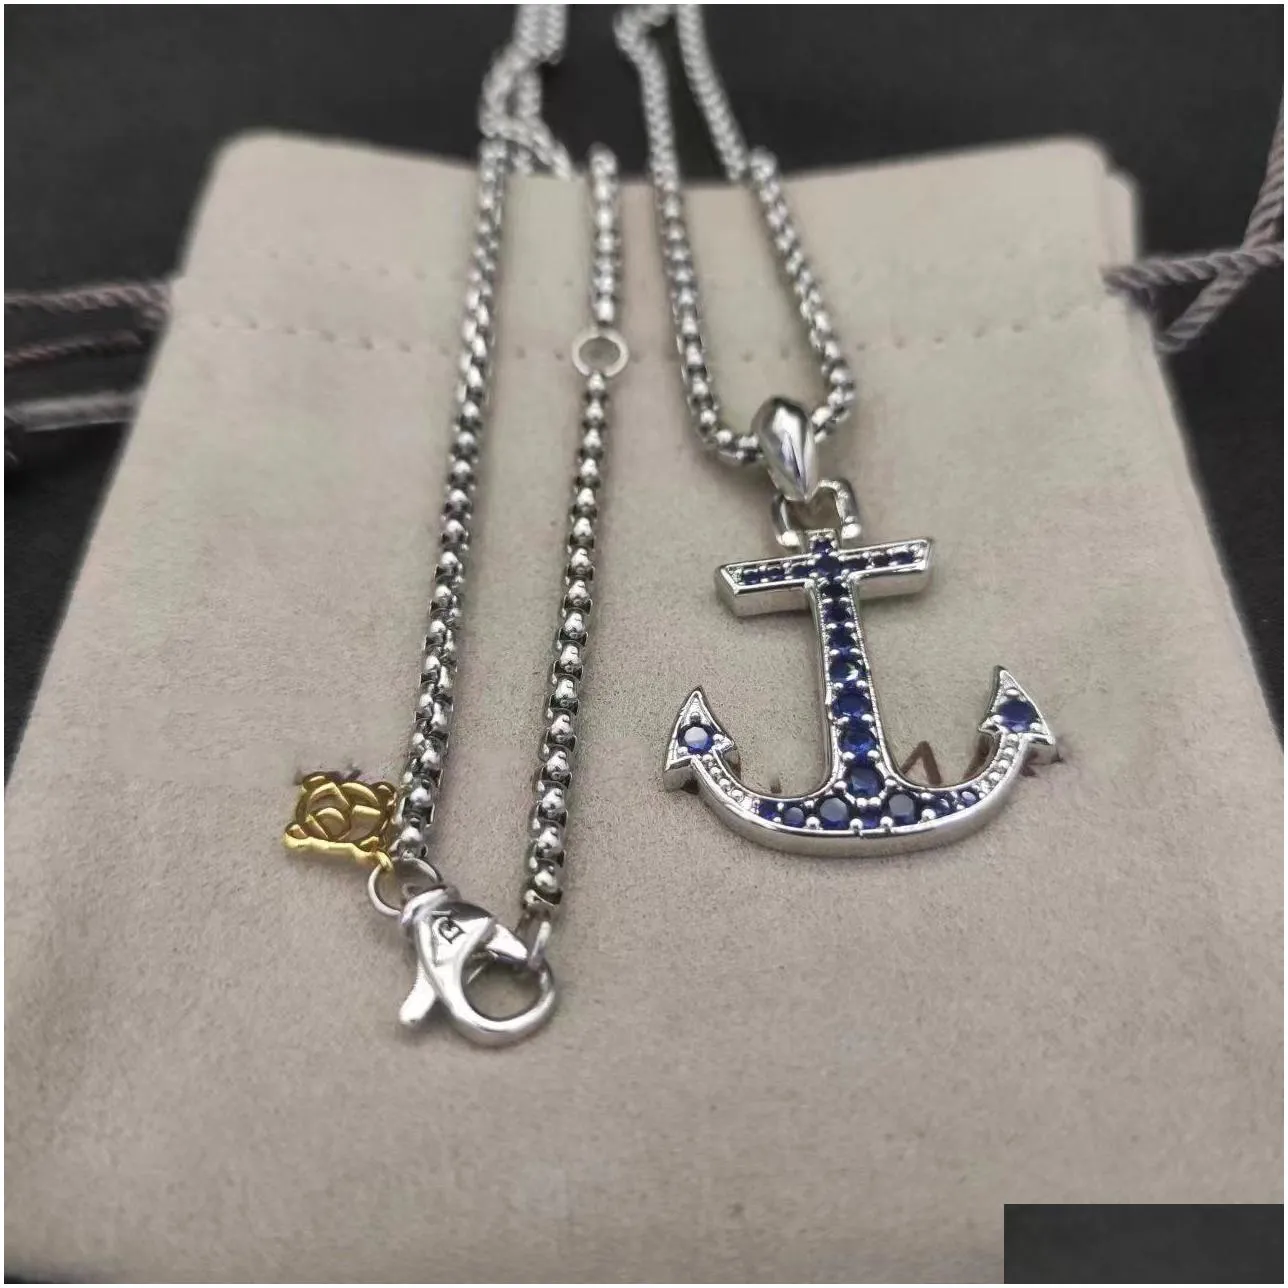 Pendant Necklaces Cross Necklace For Men Dy Jewelry Retro Vintage Designer Mens Chain Sier Man Chains Boyfriend Birthday Party Gift Otnfj